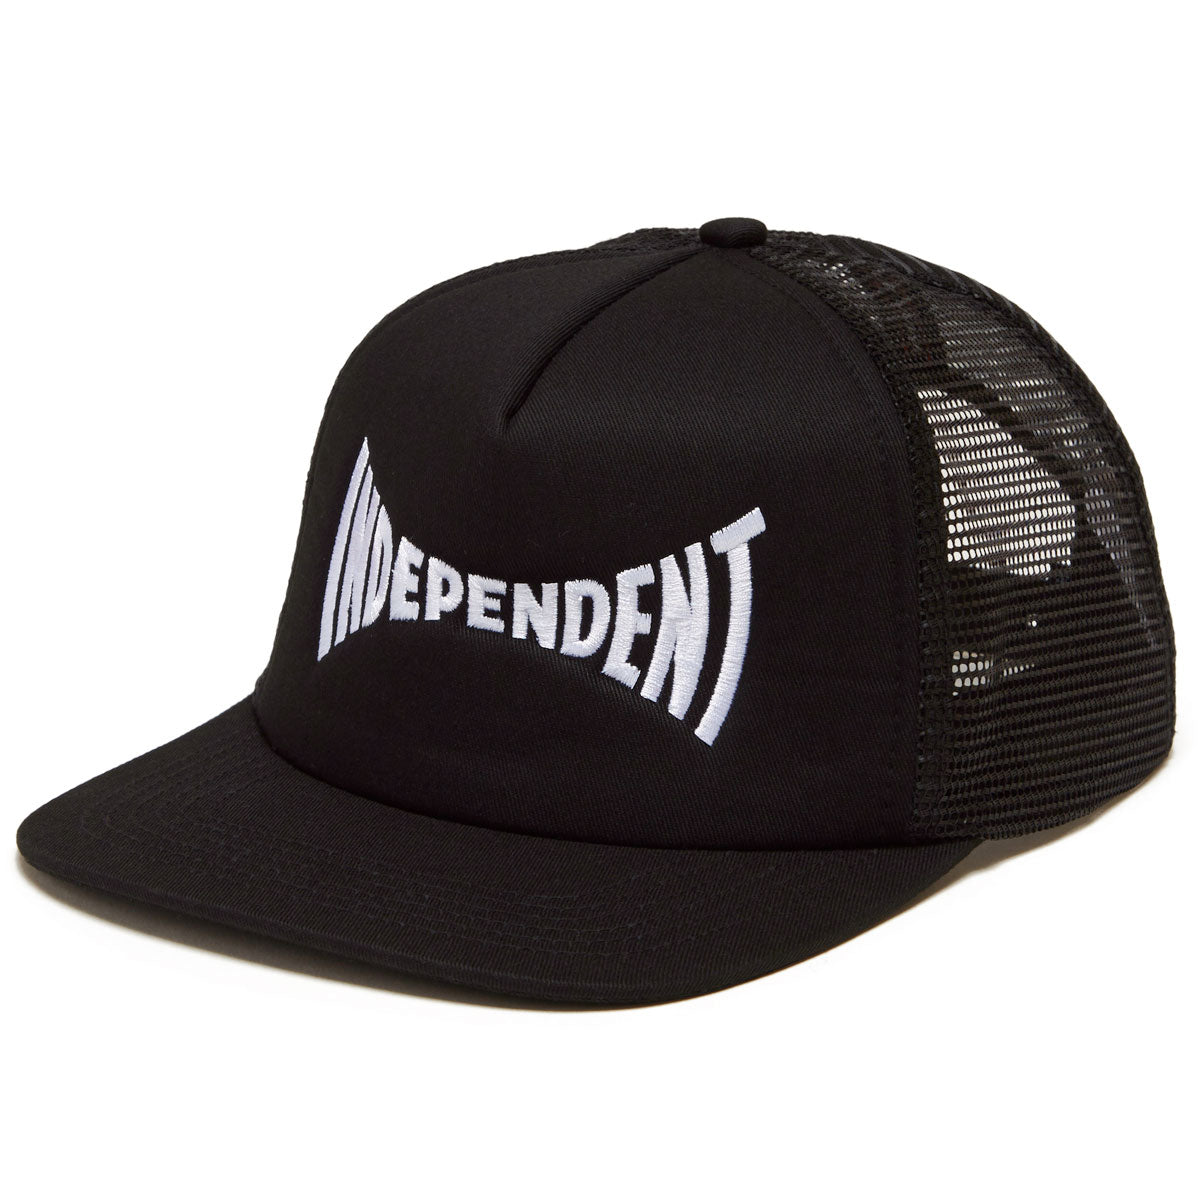 Independent Span Mesh Trucker High Profile Hat - Black image 1